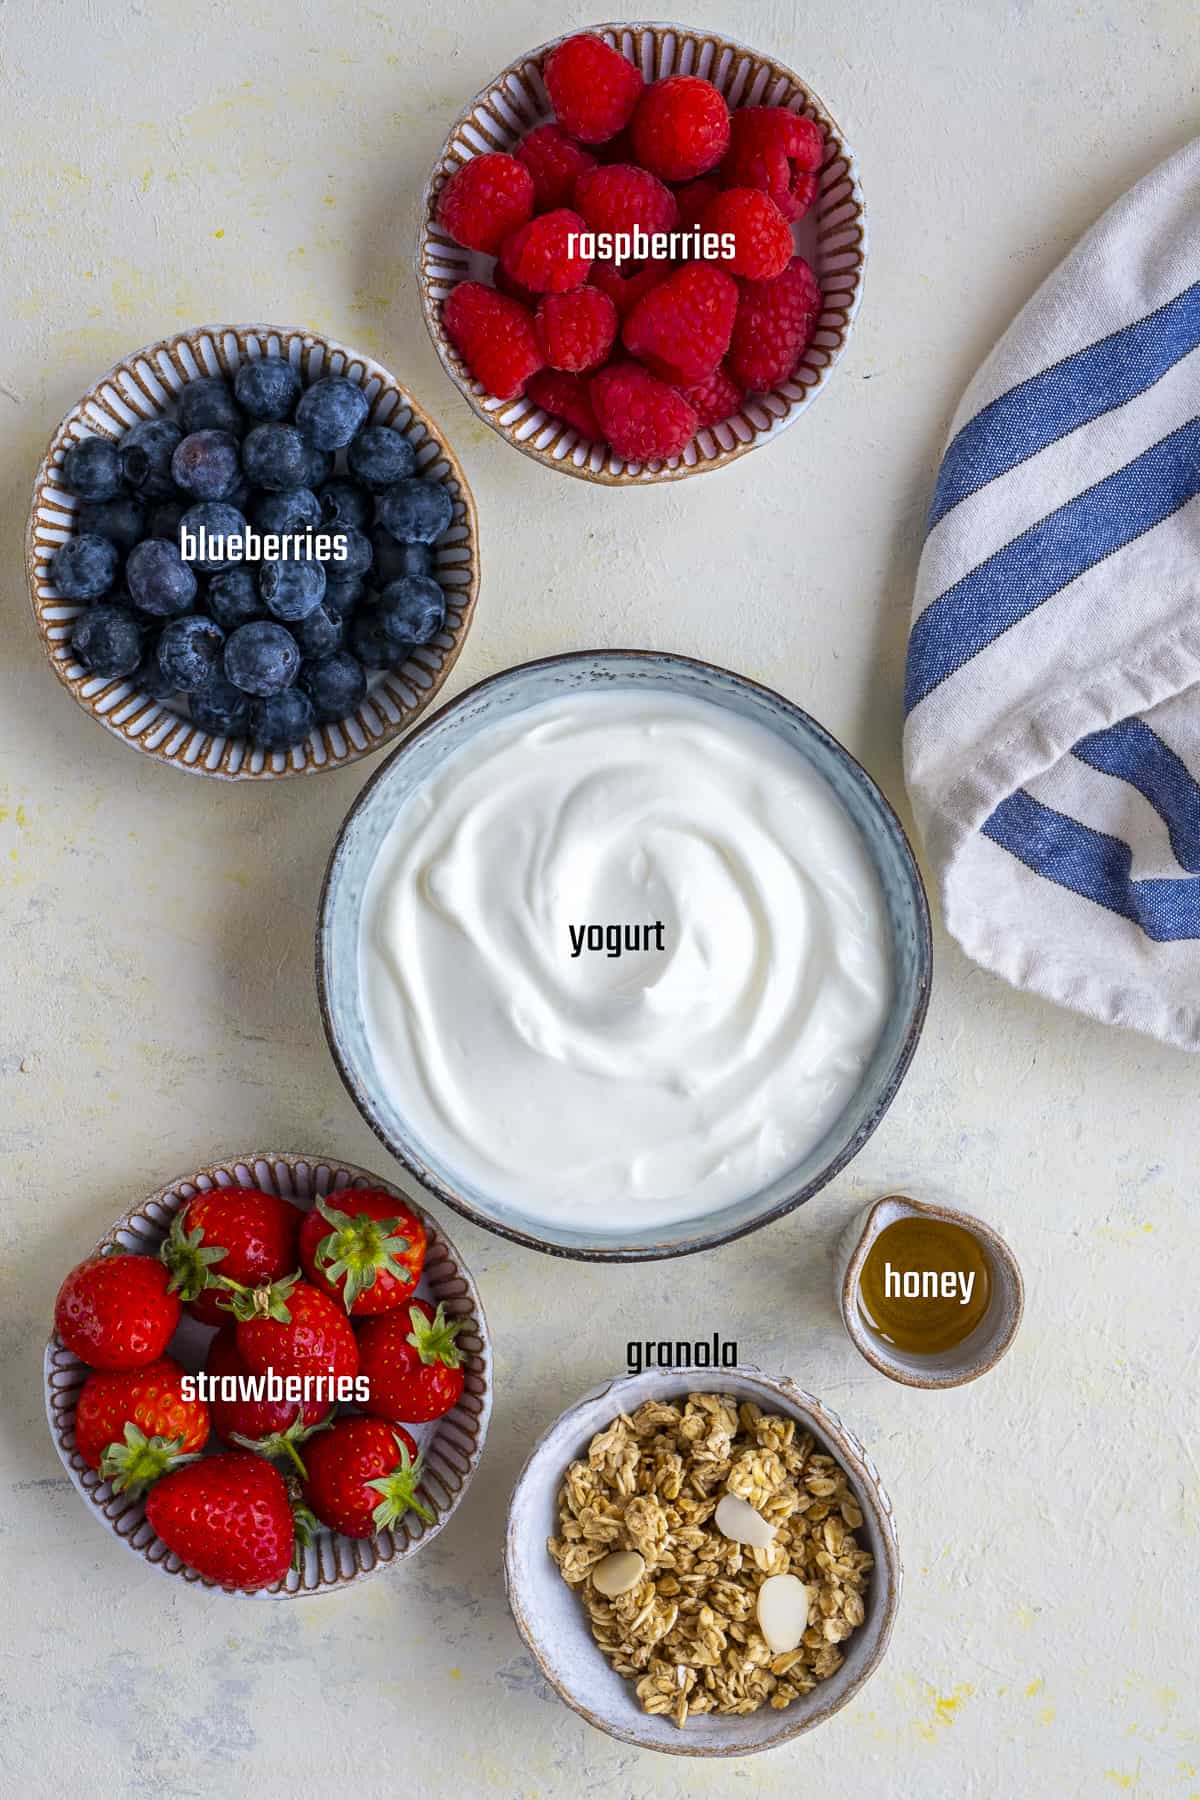 Yogurt, raspberries, blueberries, strawberries, granola and honey in separate bowls on a light background.